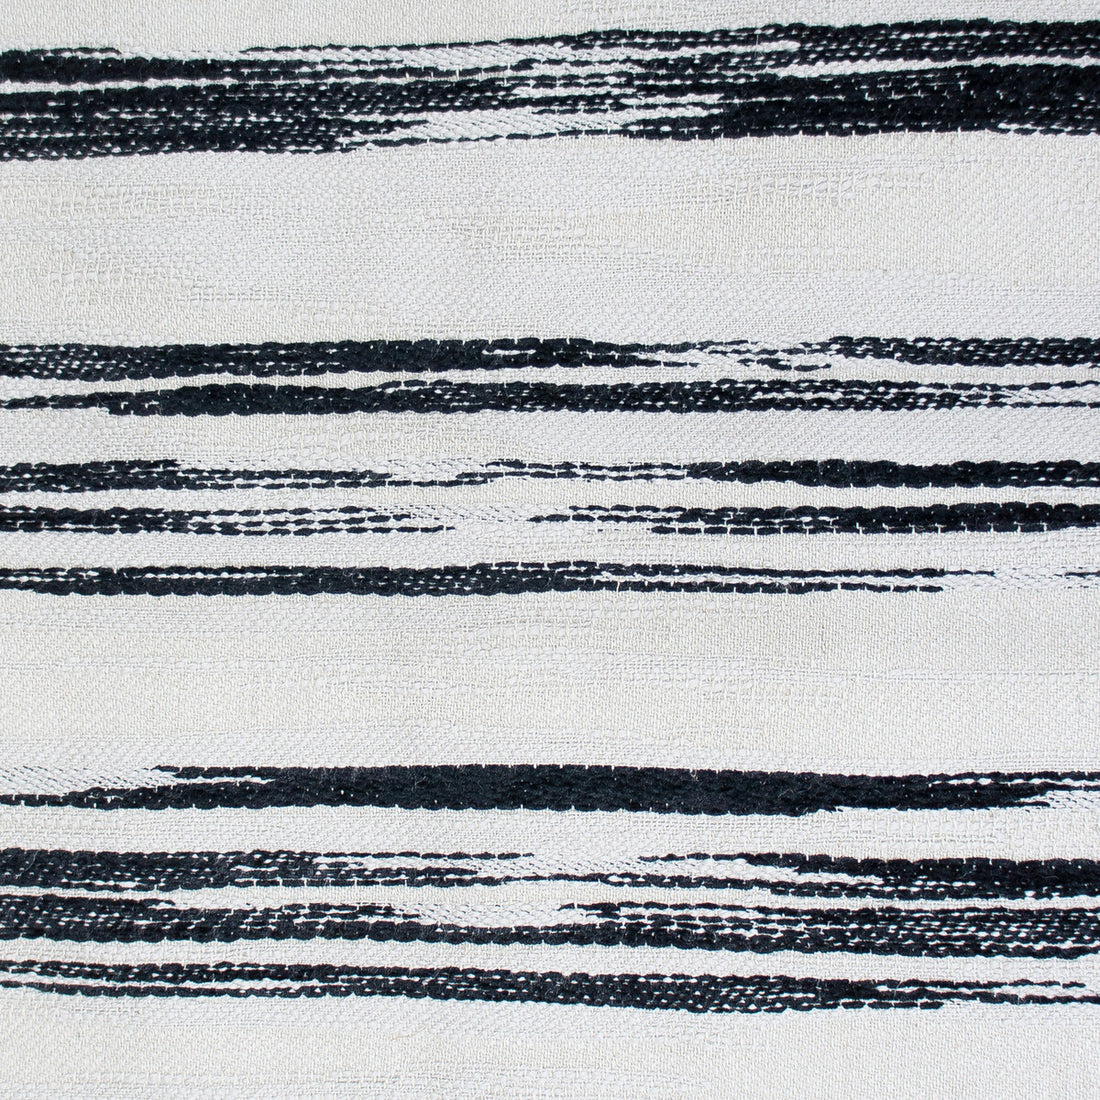 Moctezuma fabric in black color - pattern GDT5593.001.0 - by Gaston y Daniela in the Gaston Nuevo Mundo collection